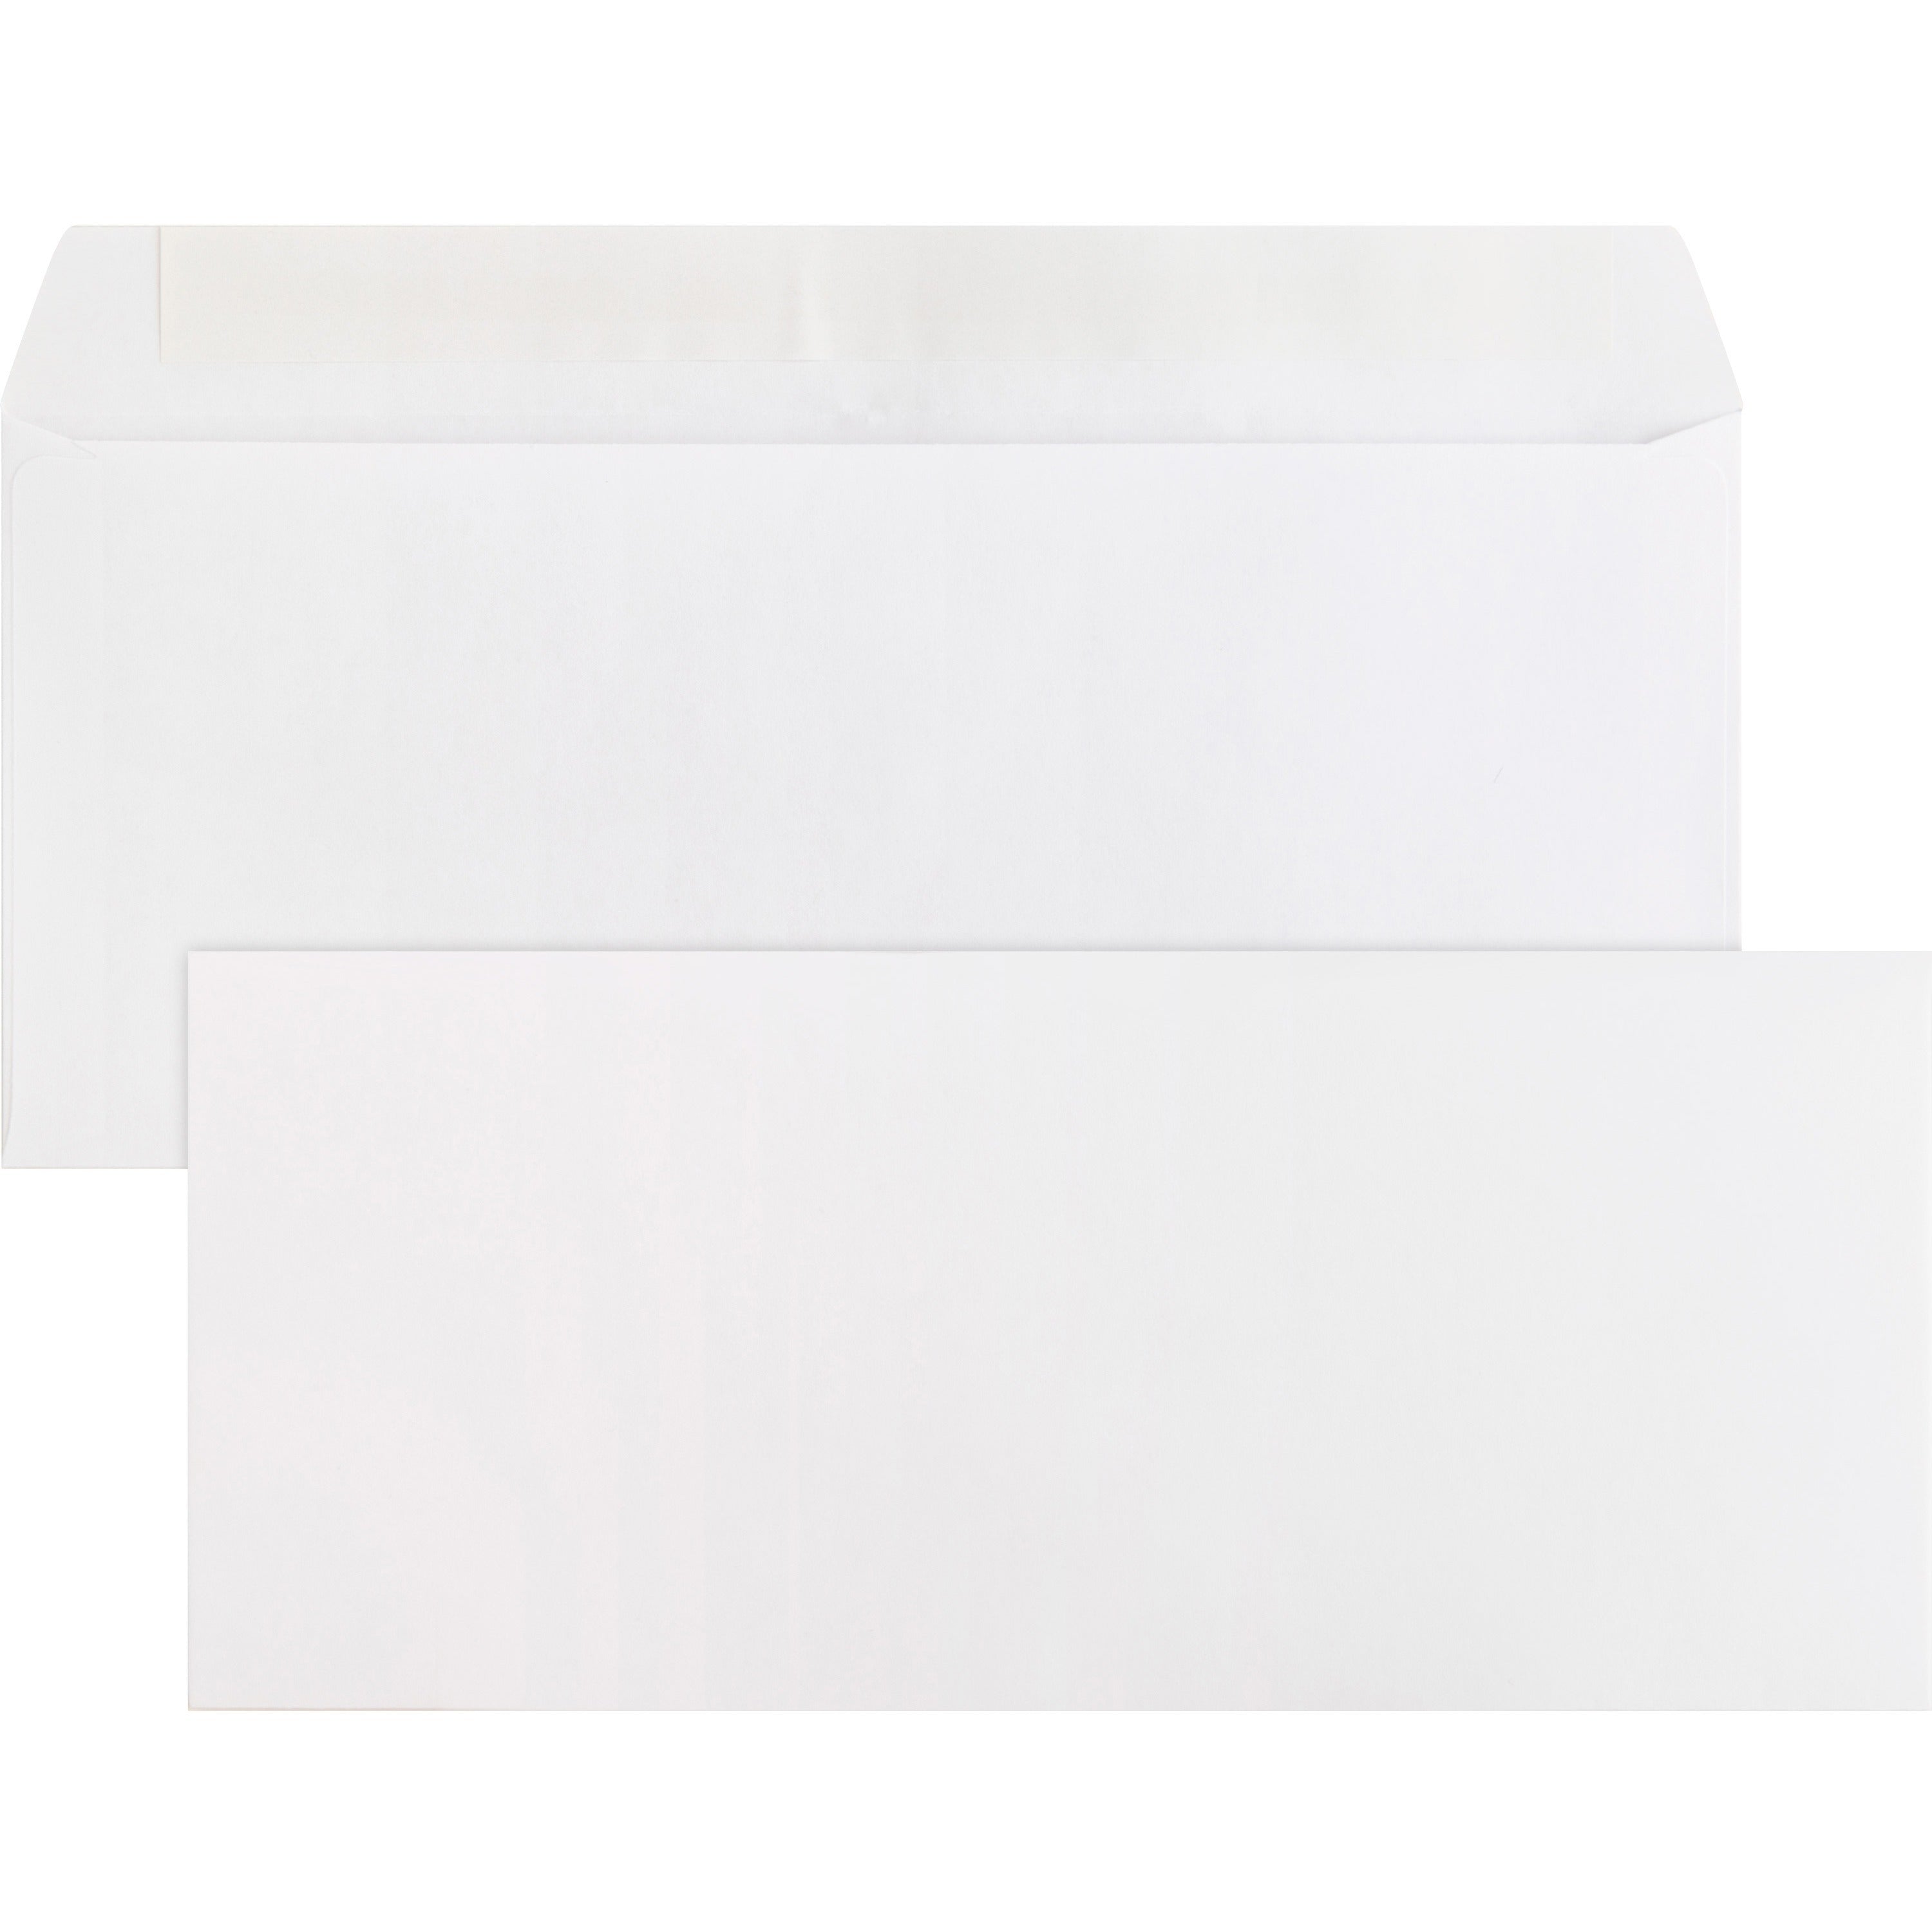 Business Source Plain Peel/Seal Business Envelopes - Business - #10 - 9 1/2" Width x 4 1/8" Length - 24 lb - Peel & Seal - Wove - 500 / Box - White - 